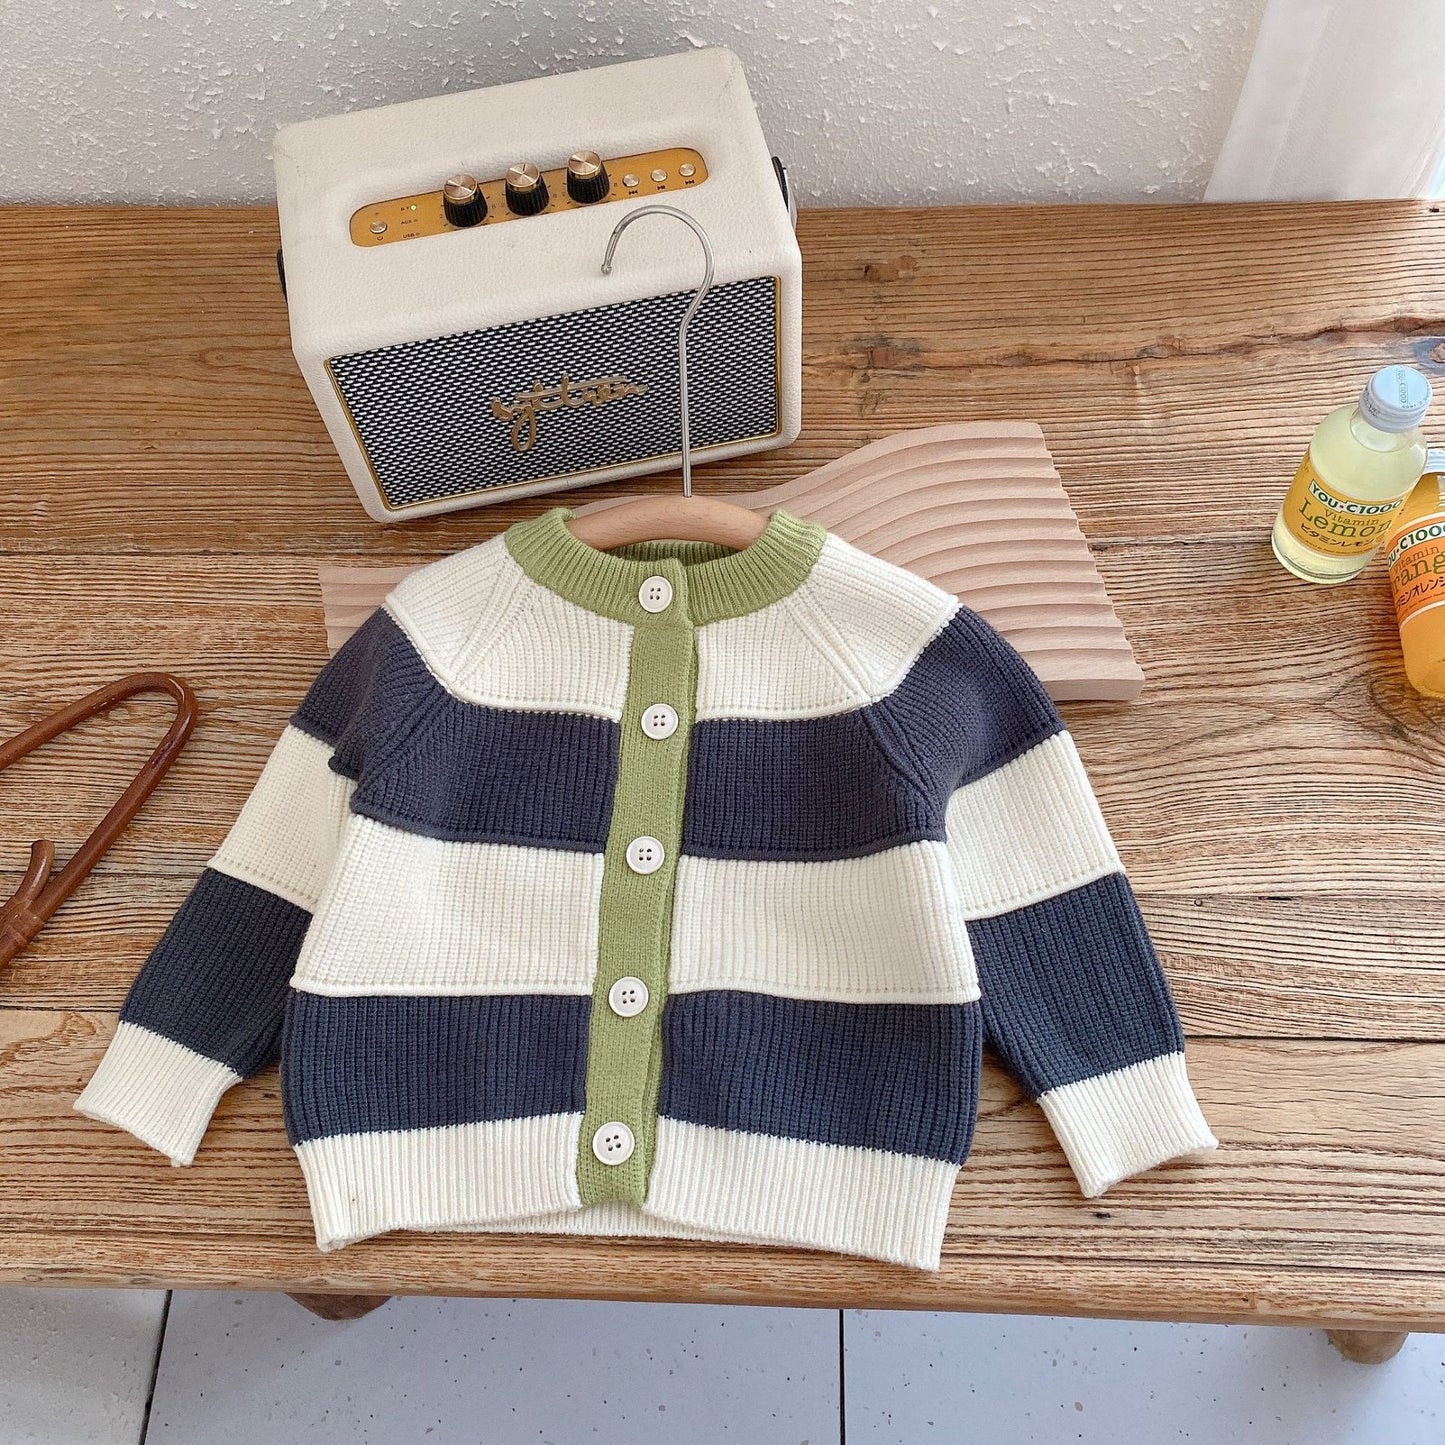 Boys' Girls' Cardigans Stripe Sweater Cotton School Uniforms Knit Sweaters